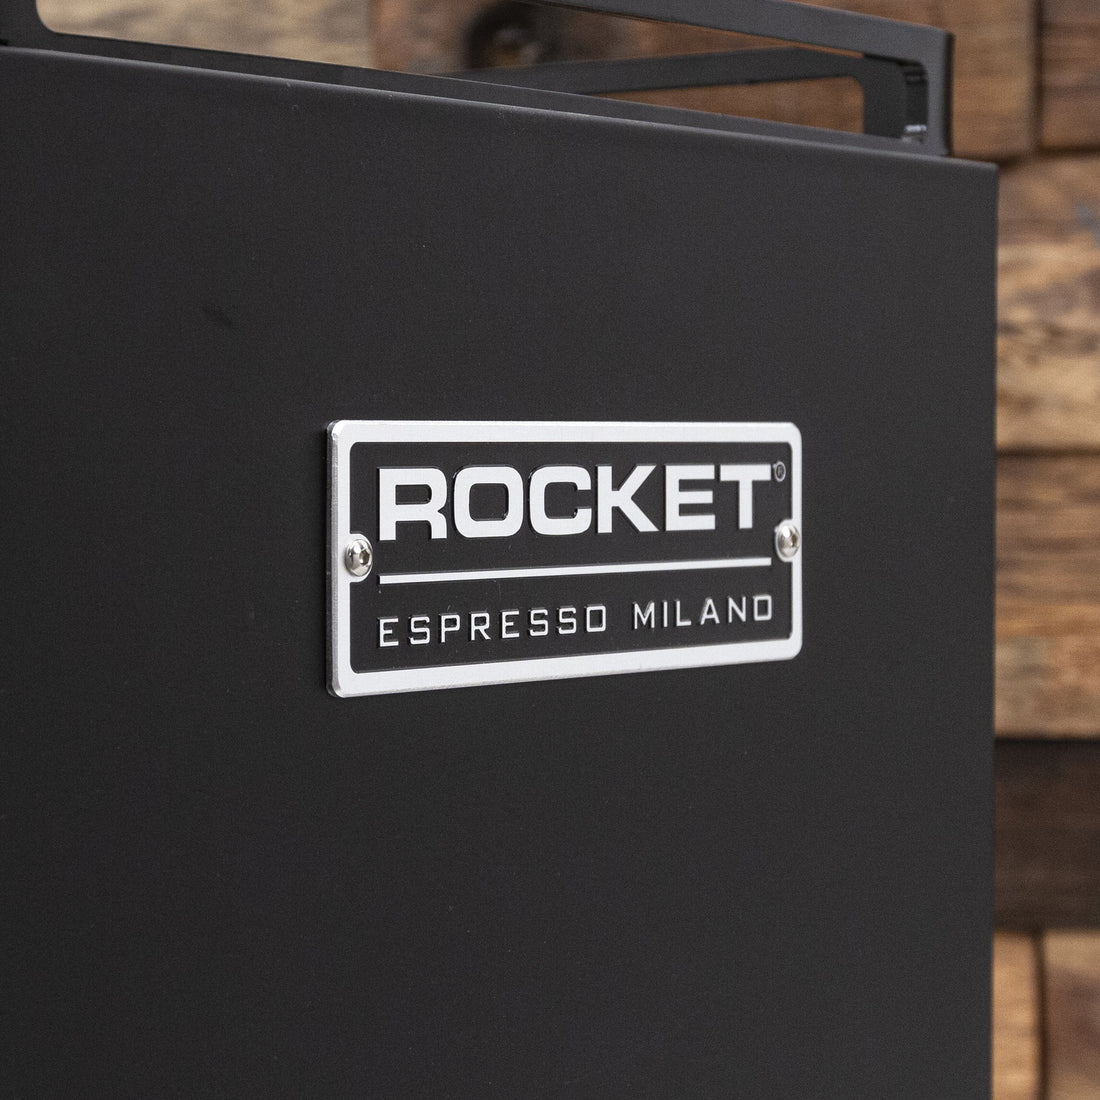 Rocket Espresso Appartamento Serie Nera Espresso Machine - Walnut Burl